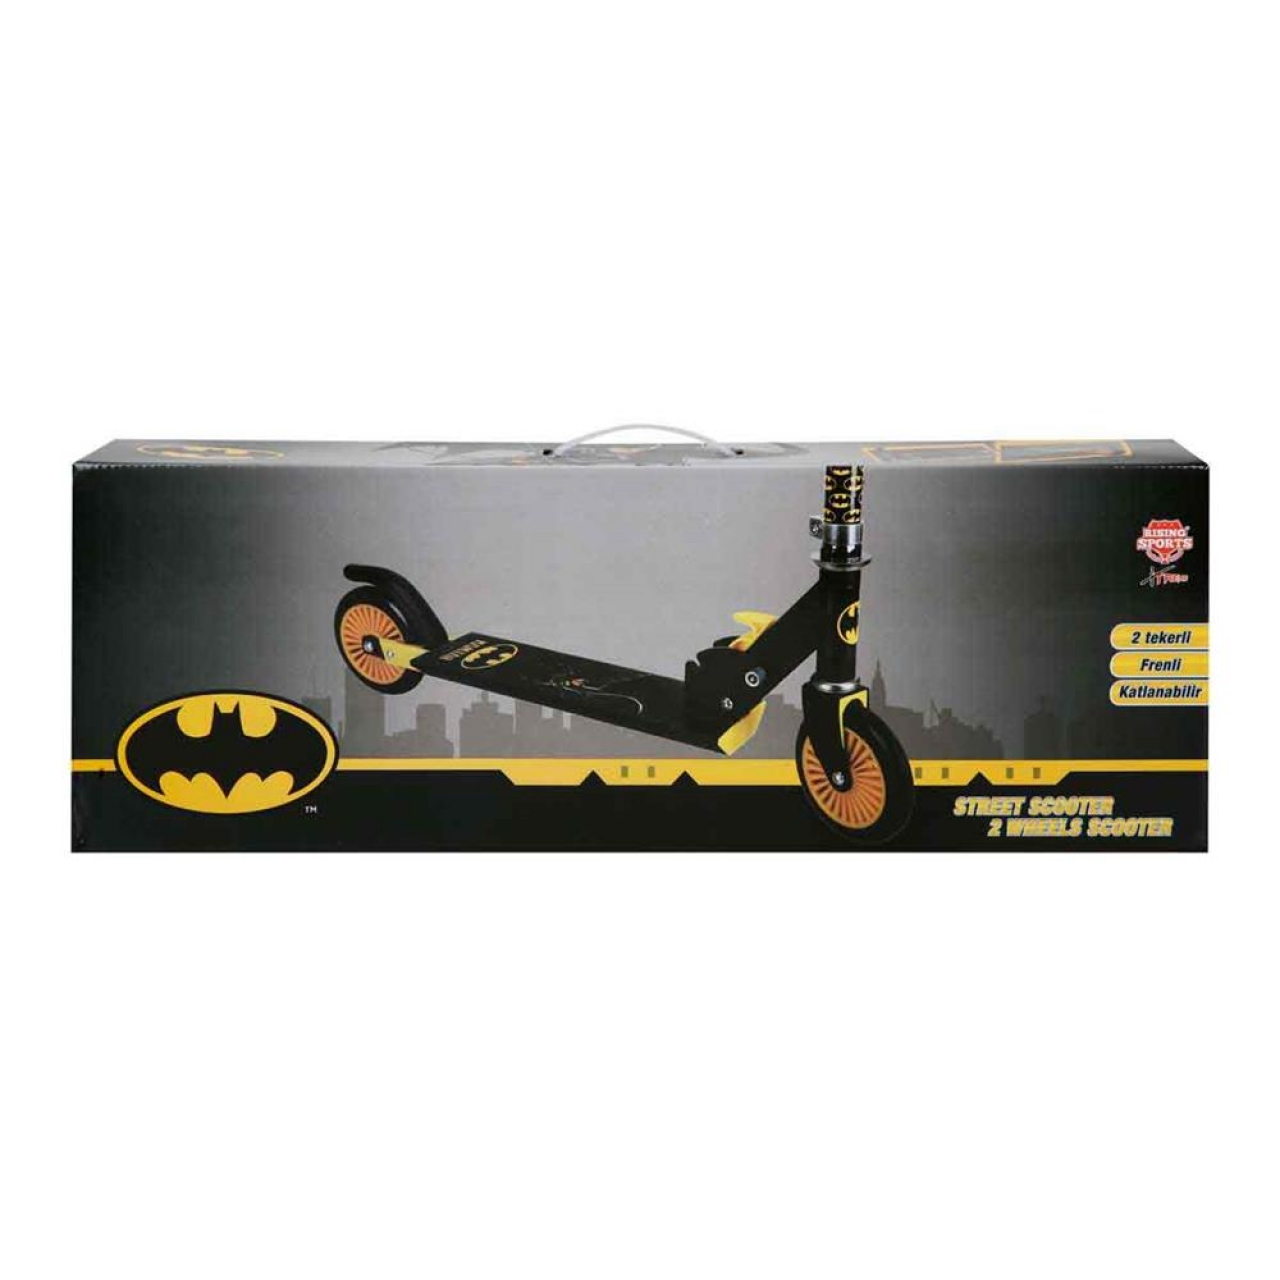 Batman 2 Tekerlekli Scooter